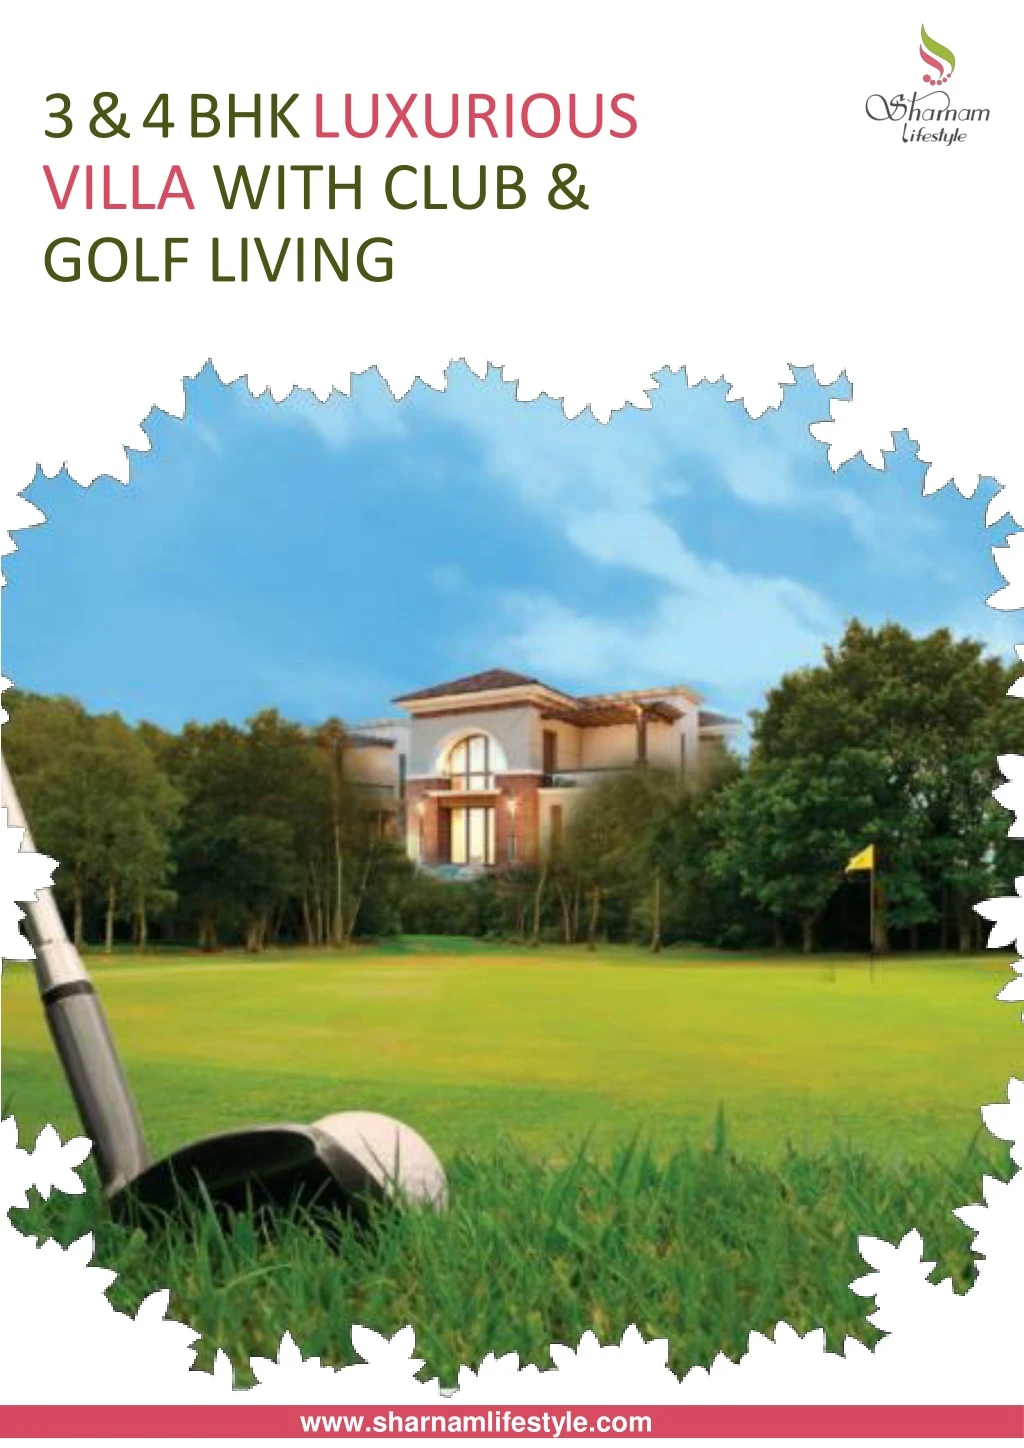 3 4 bhk luxurious villa with club golf living